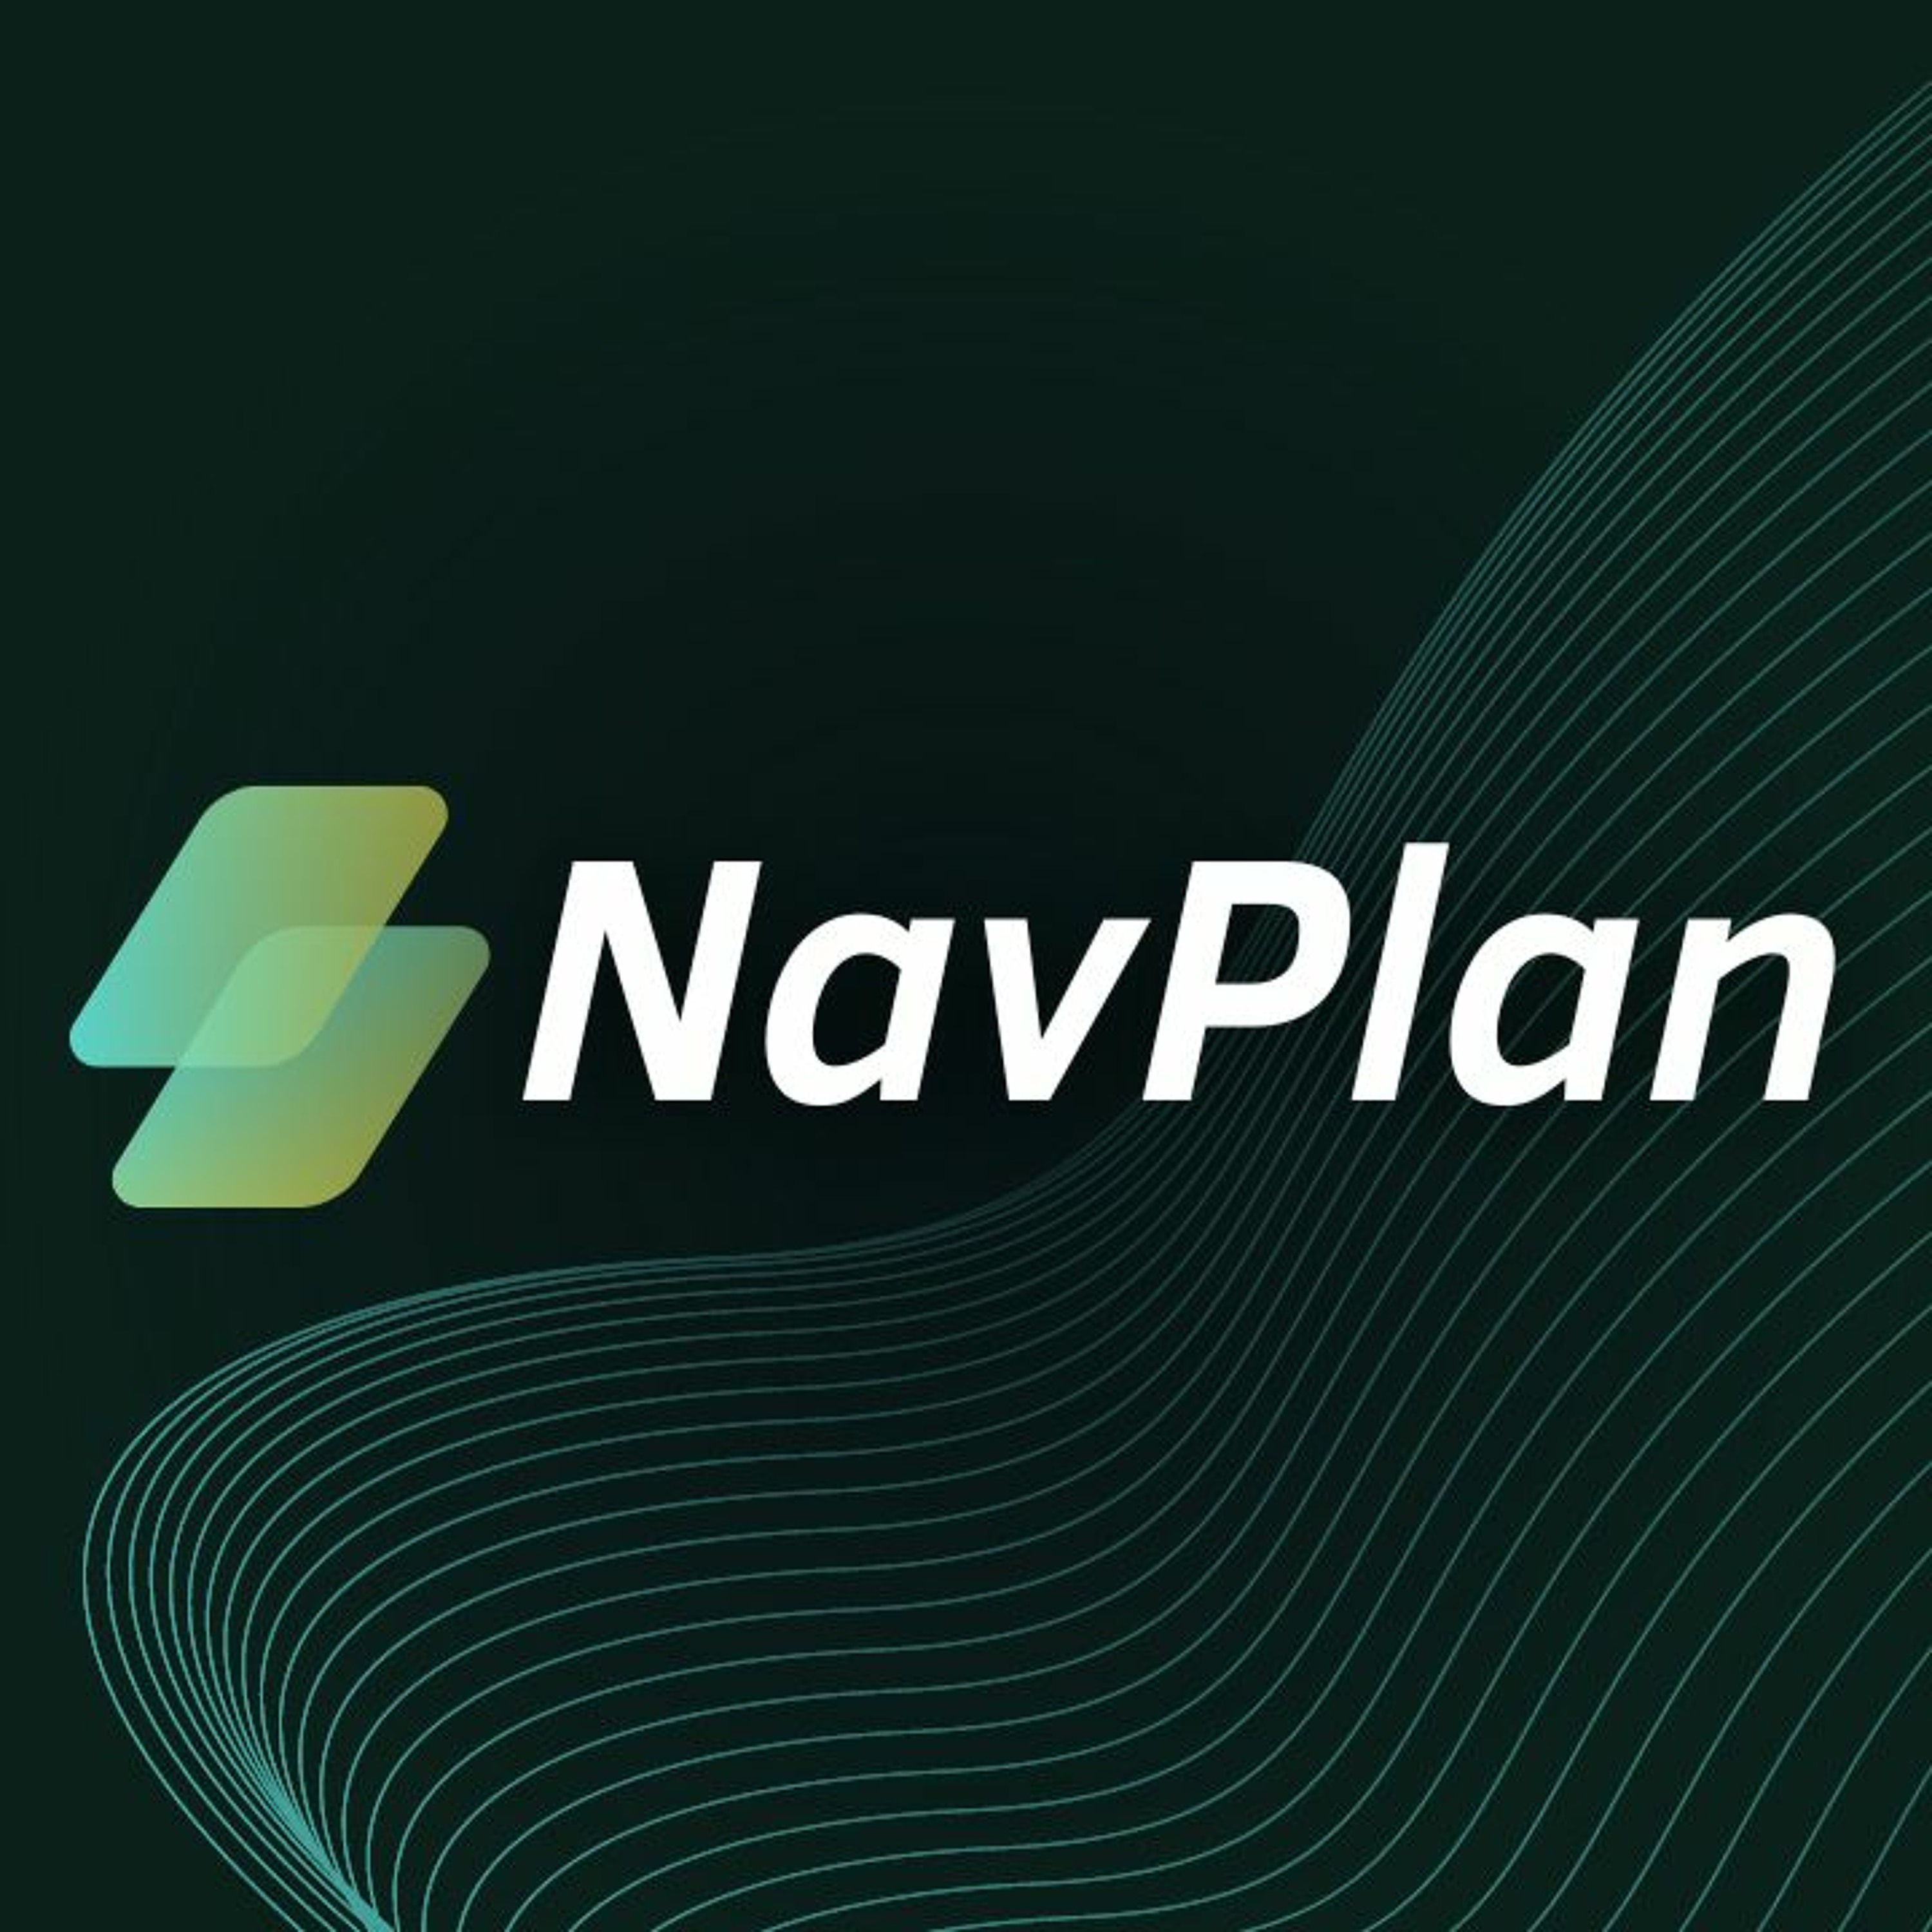 Where To Start :: NavPlan Pt 1